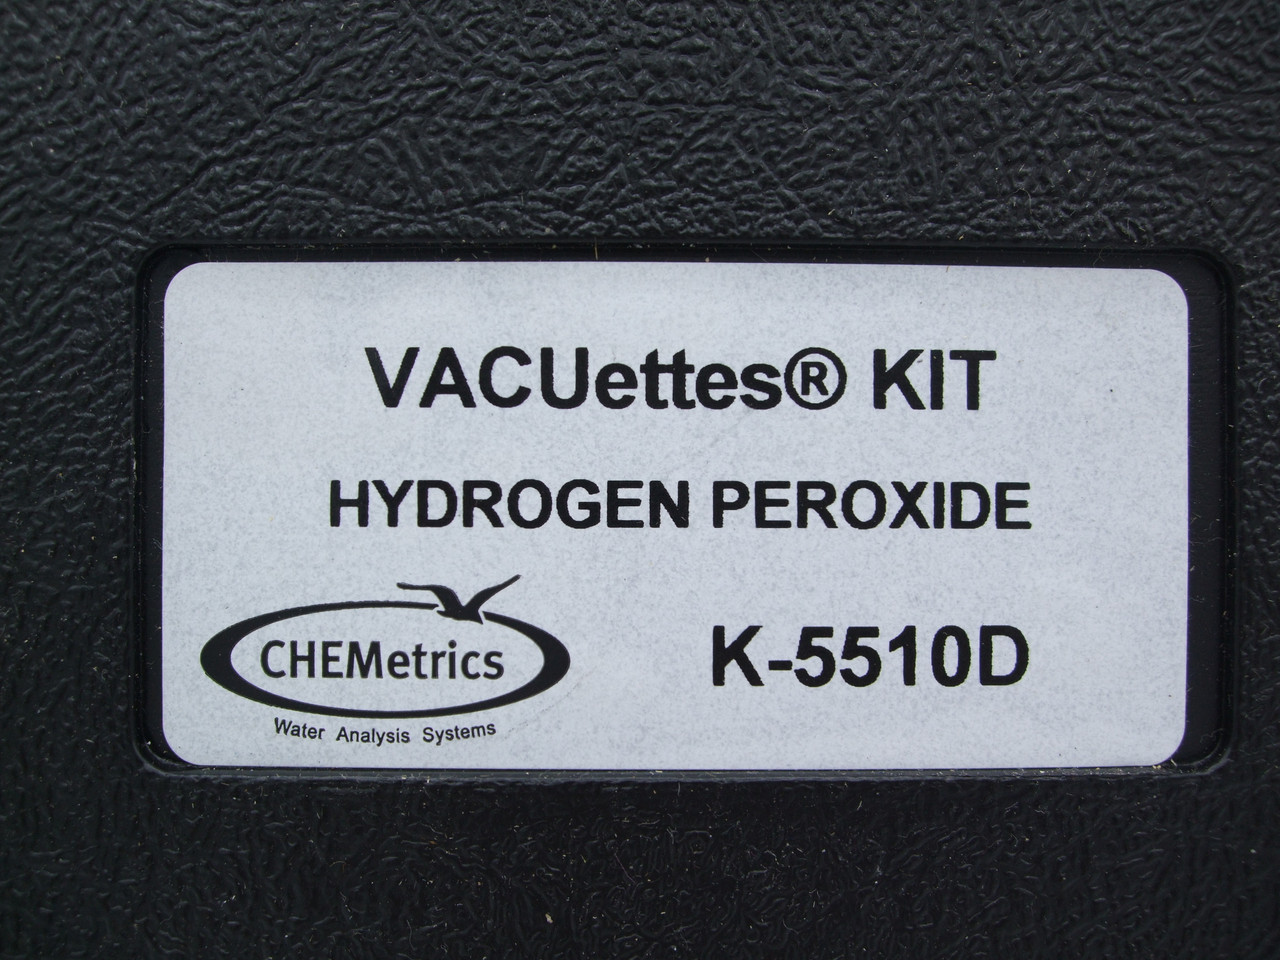 Chemetrics K-5510D Hydrogen Peroxide VACUettes Kit